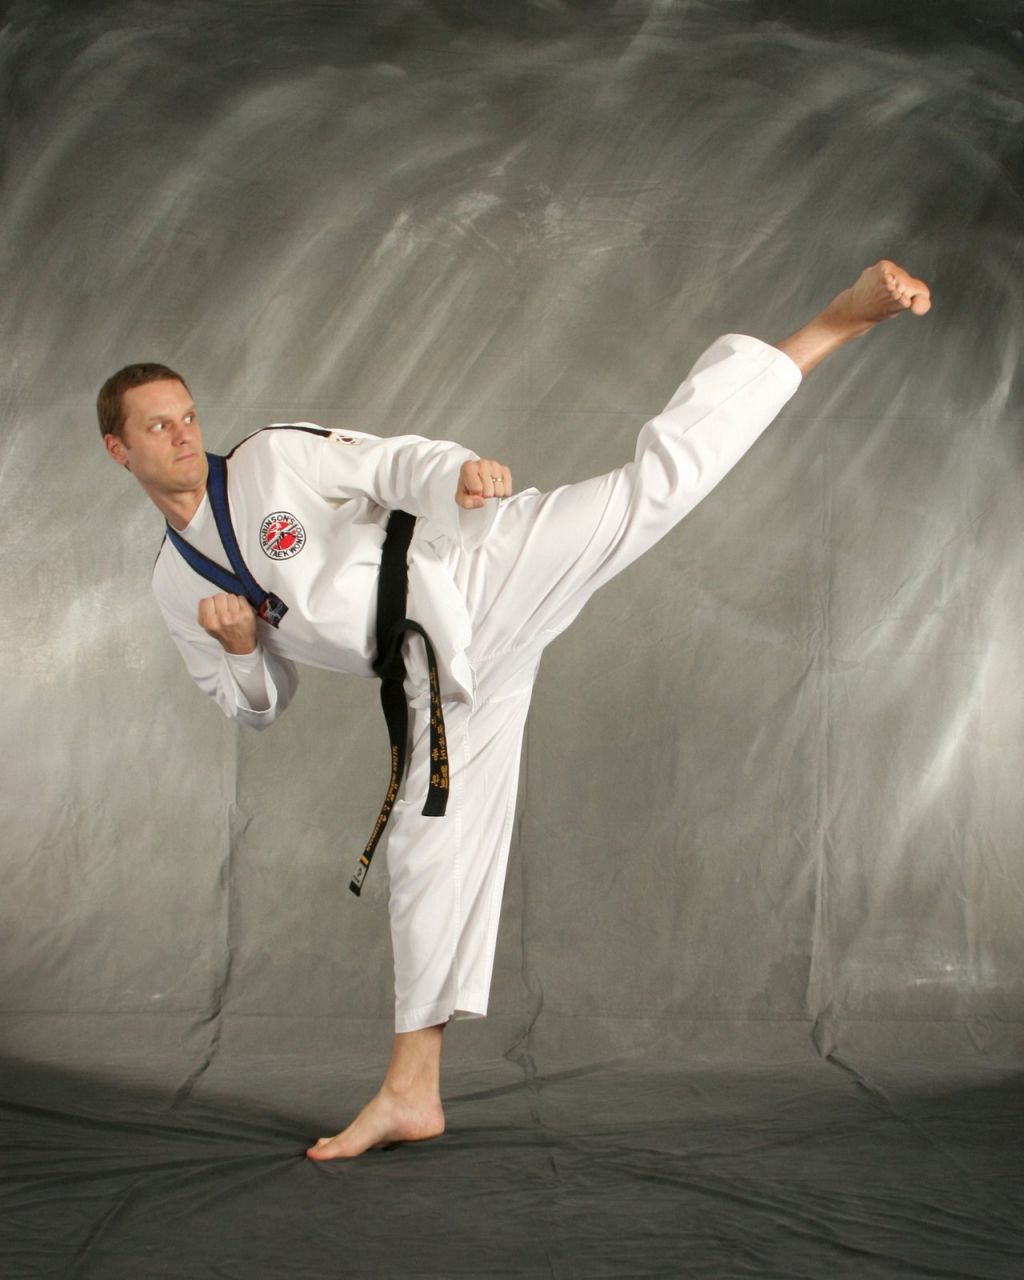 Taekwondo essay